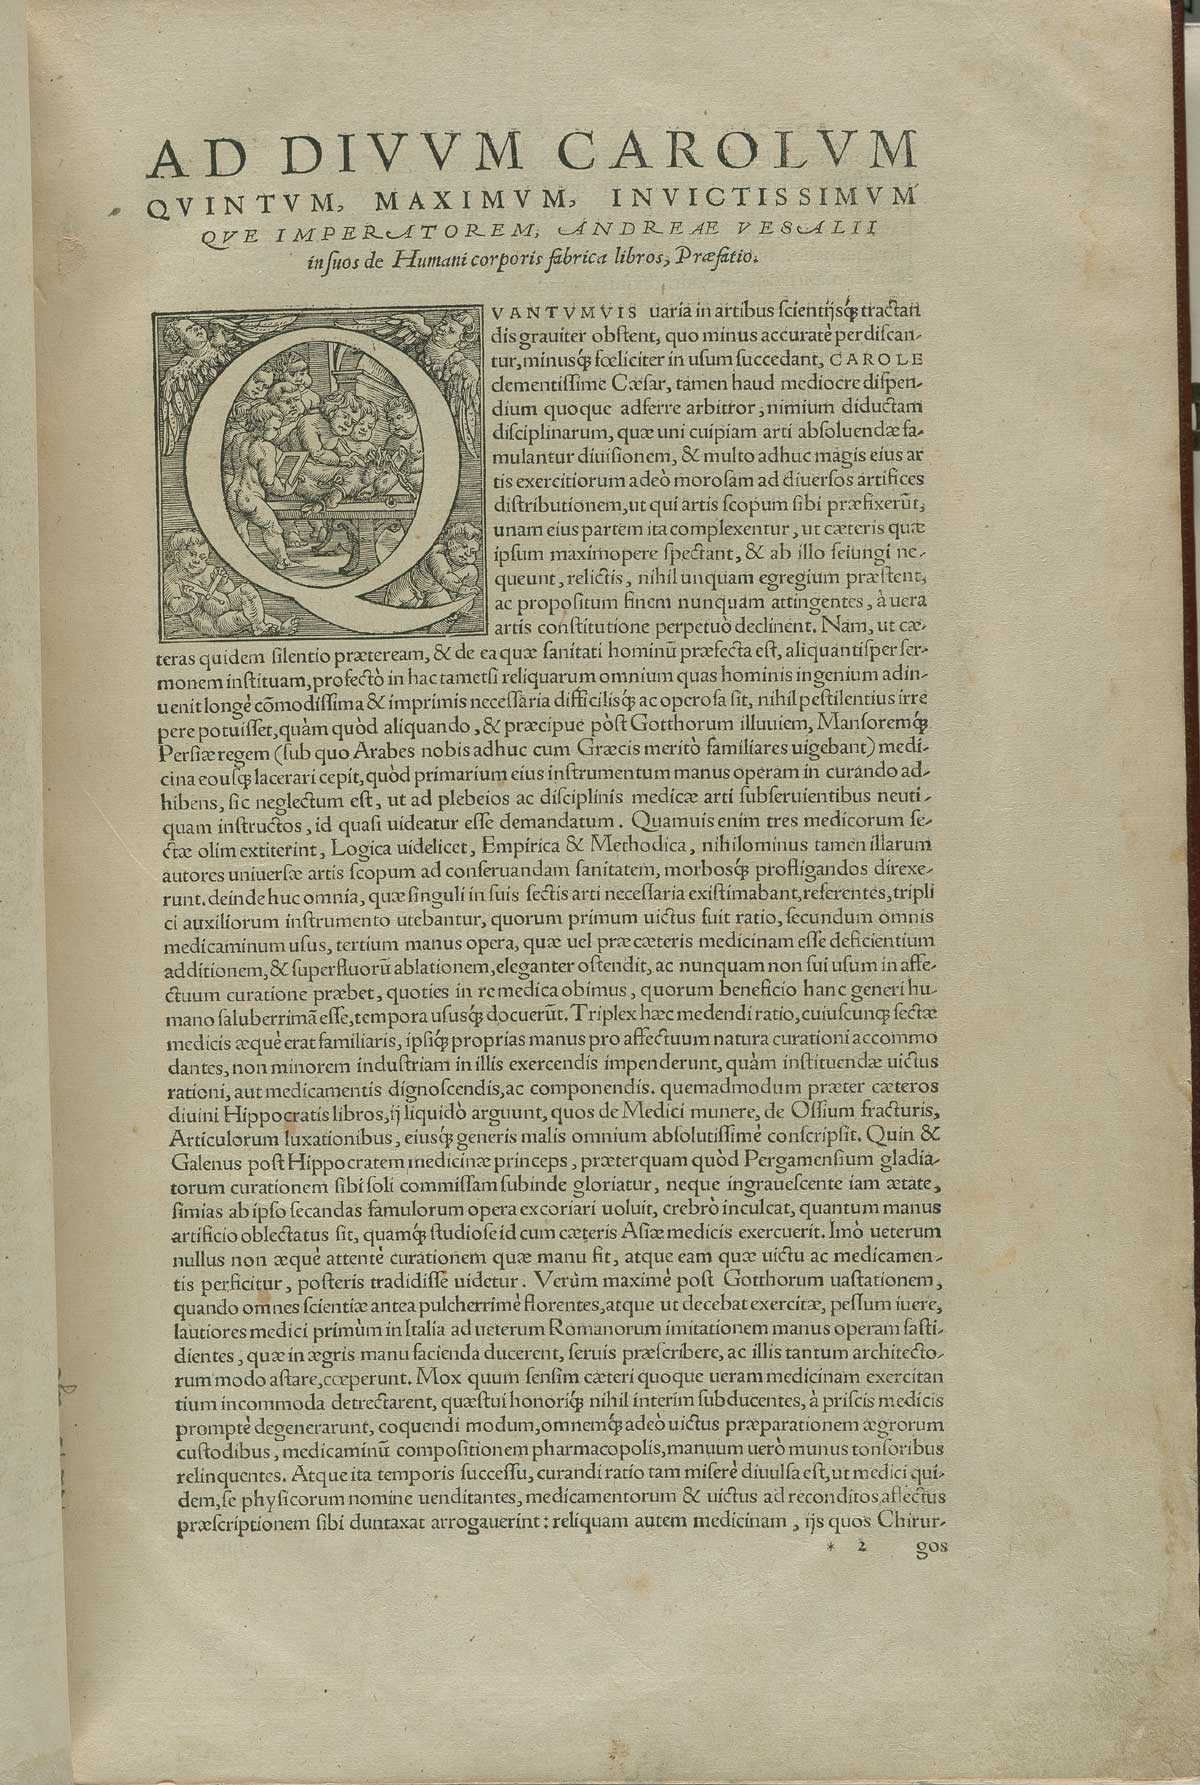 The dedication page of Andreas Vesalius' De corporis humani fabrica libri septem.